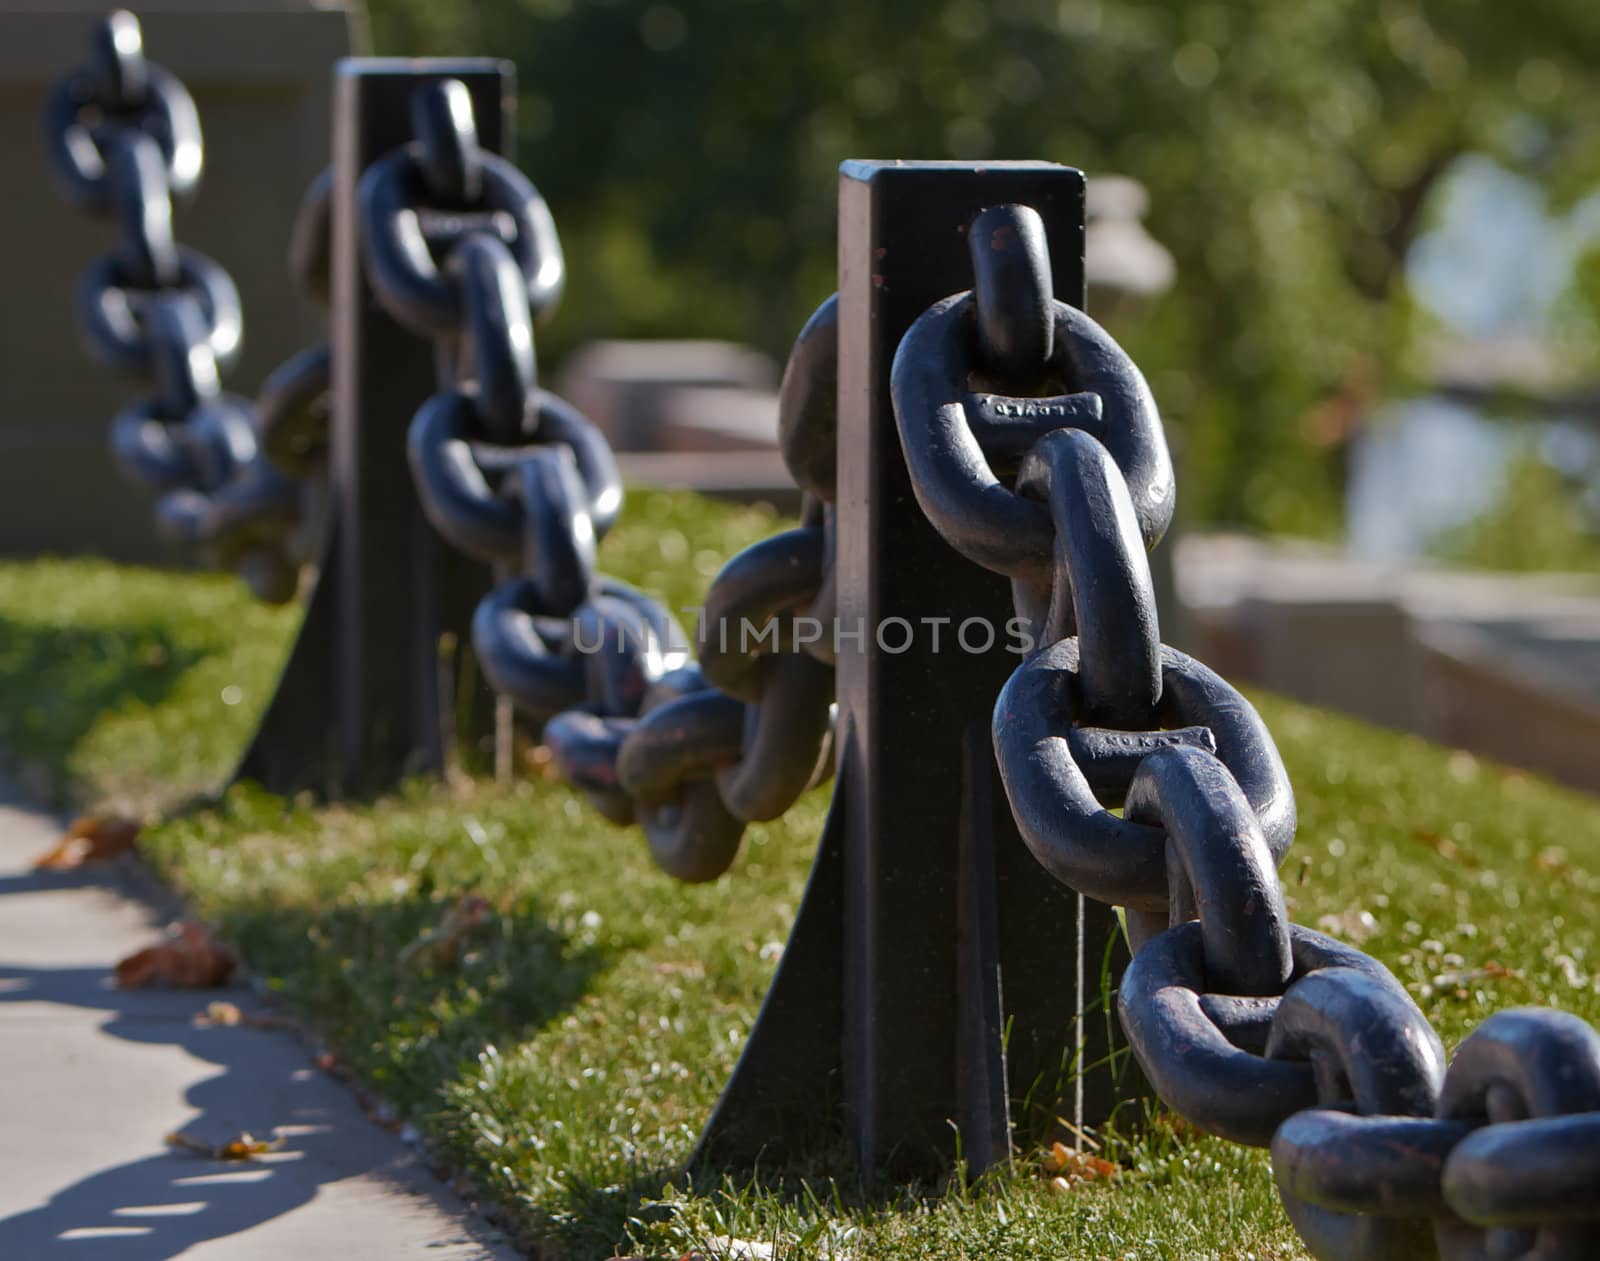 Black Steel Anchor Chain used for a railing againt grass lawn